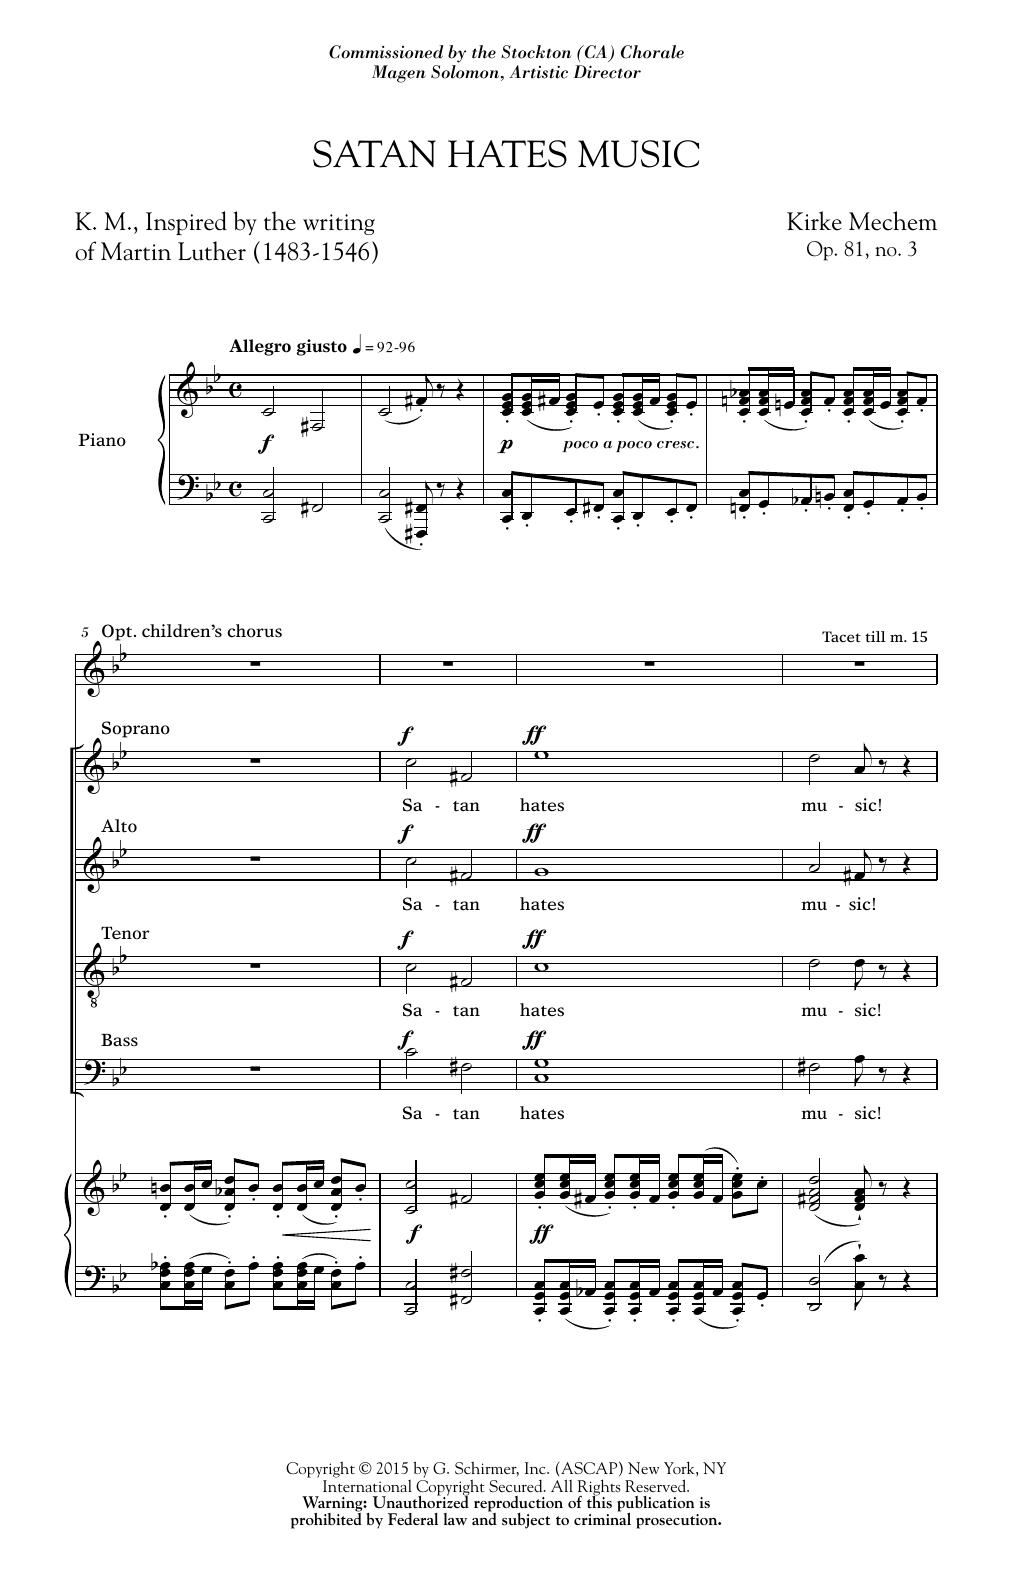 Kirke Mechem Satan Hates Music sheet music notes and chords arranged for SATB Choir